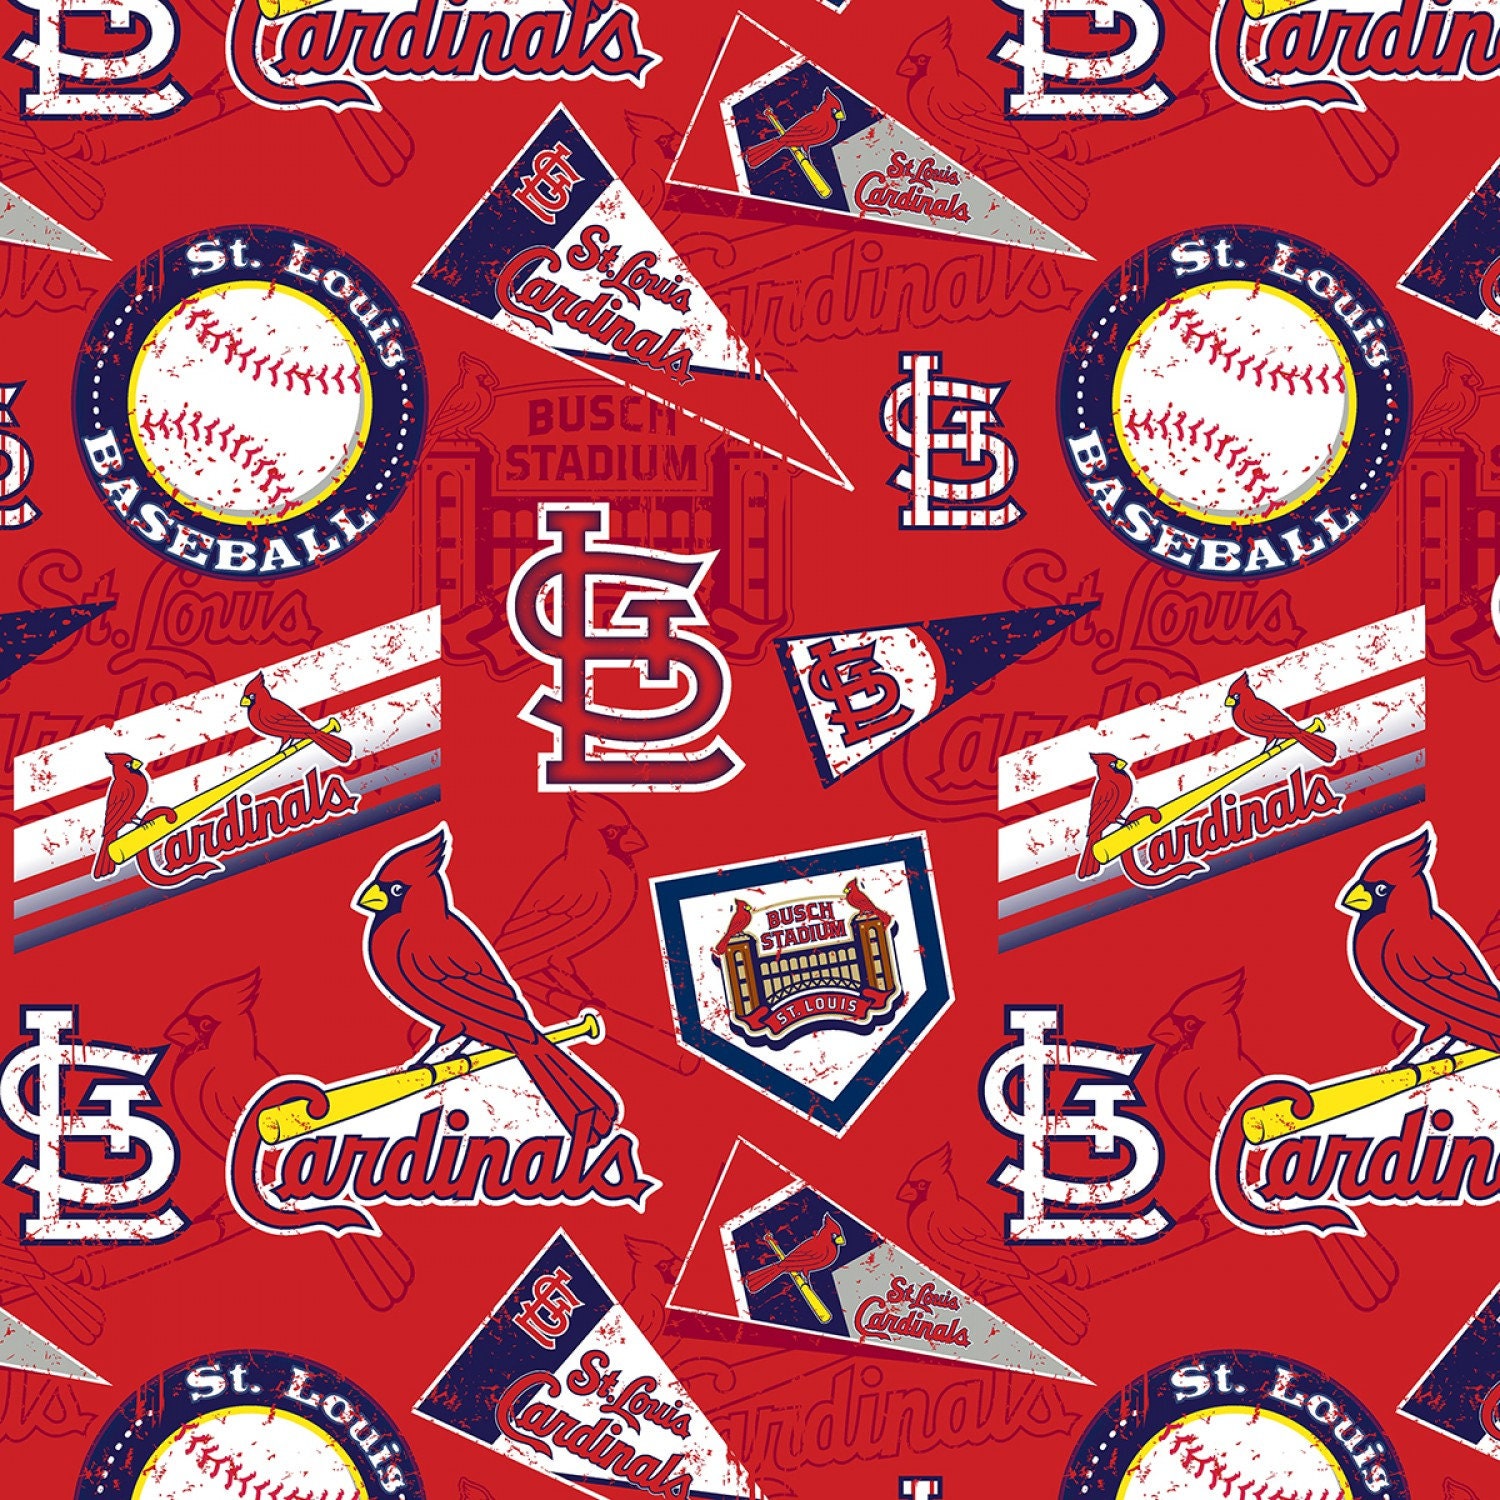 Joann Fabrics Fabric Traditions St. Louis Cardinals Cotton Fabric Patch